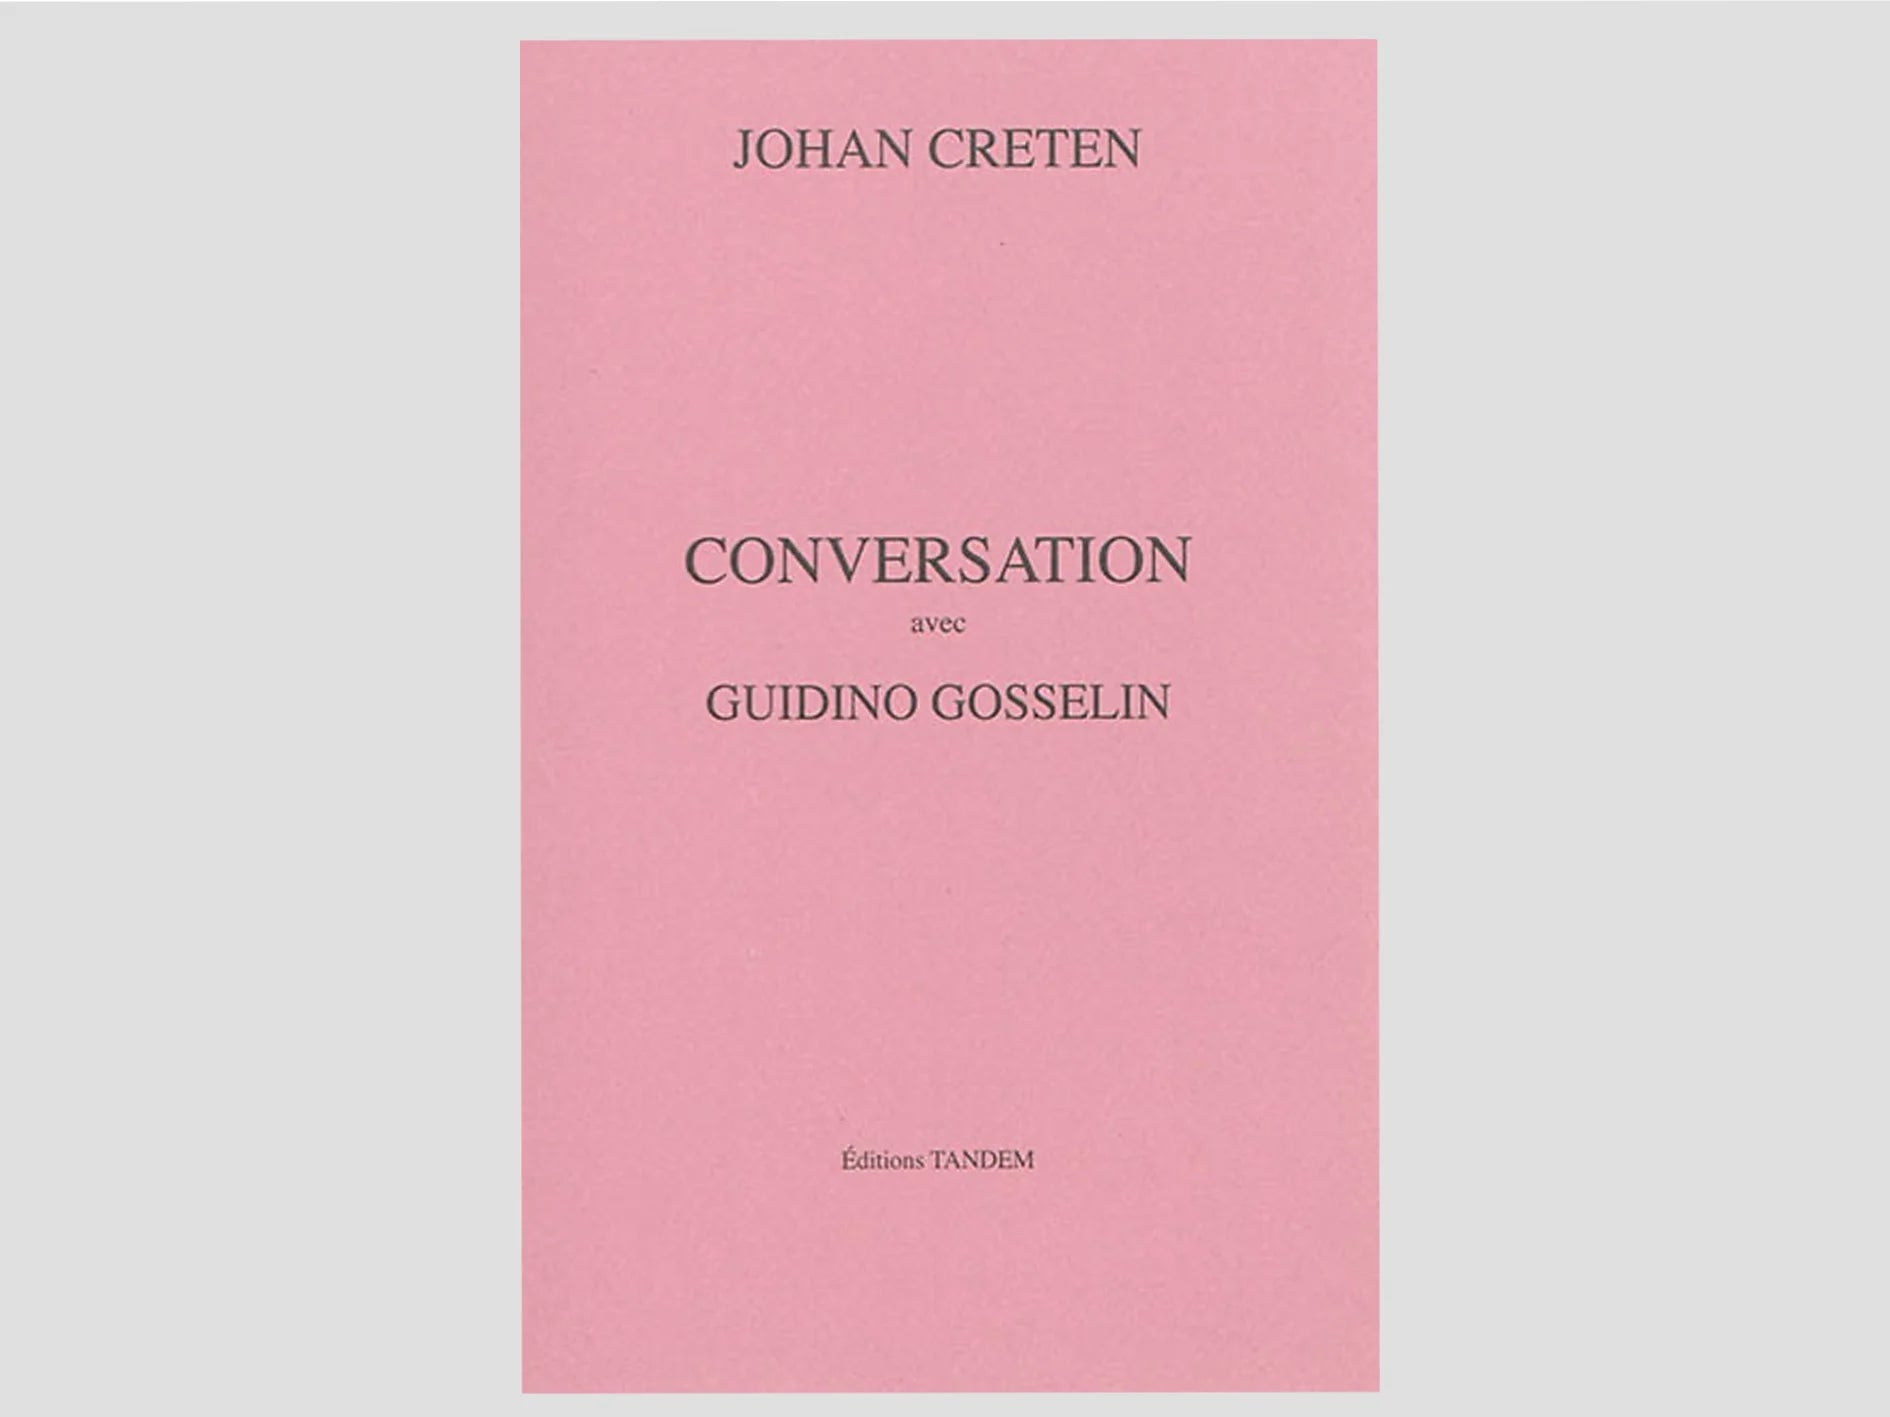 Conversation with Guidino Gosselin